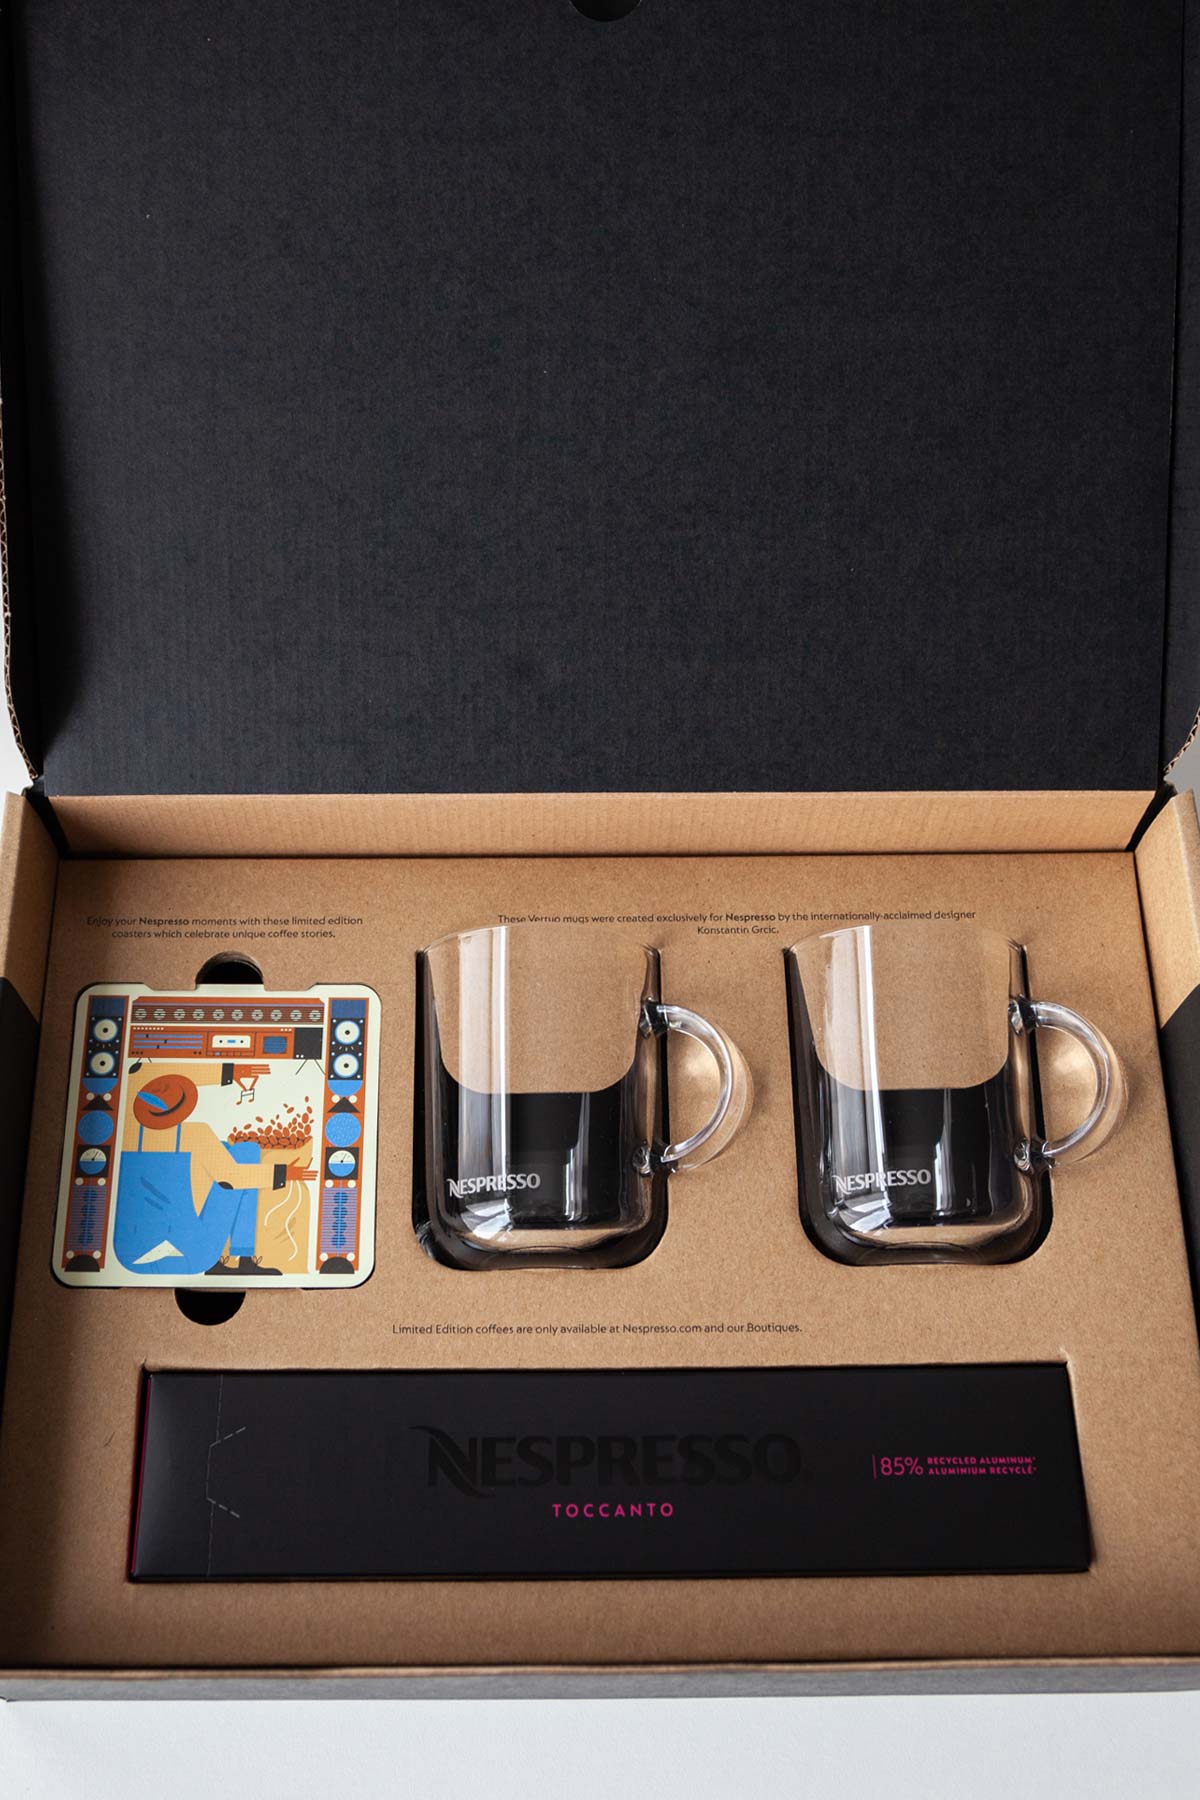 Nespresso Welcome Gift box.